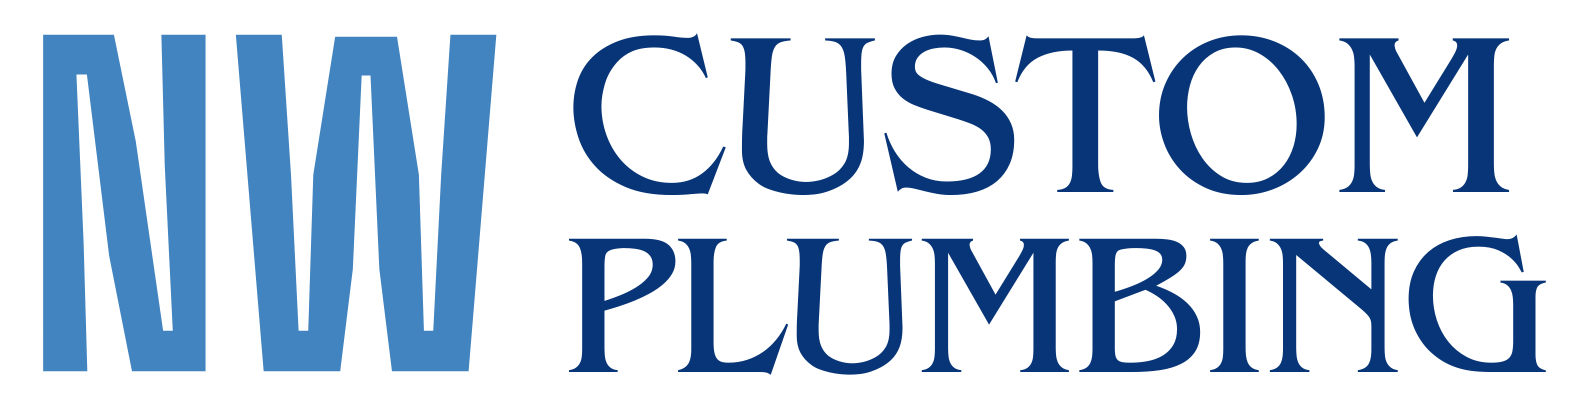 NW custom plumbing placeholder logo